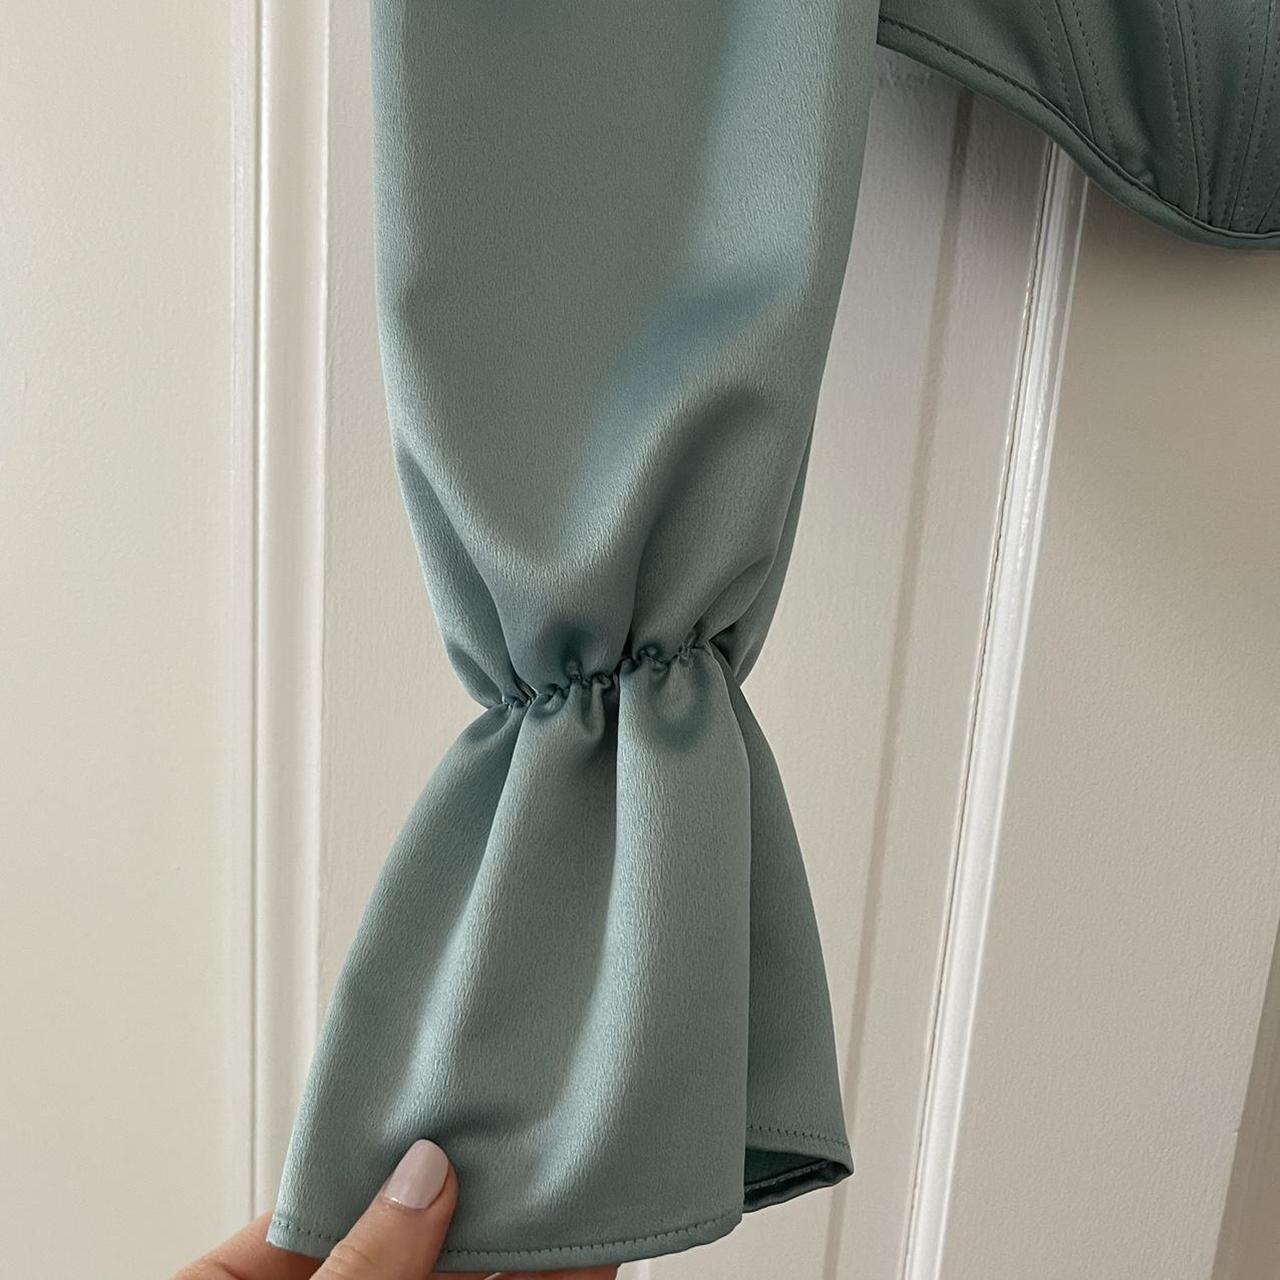 Zara Women's Blue and Green Corset (3)